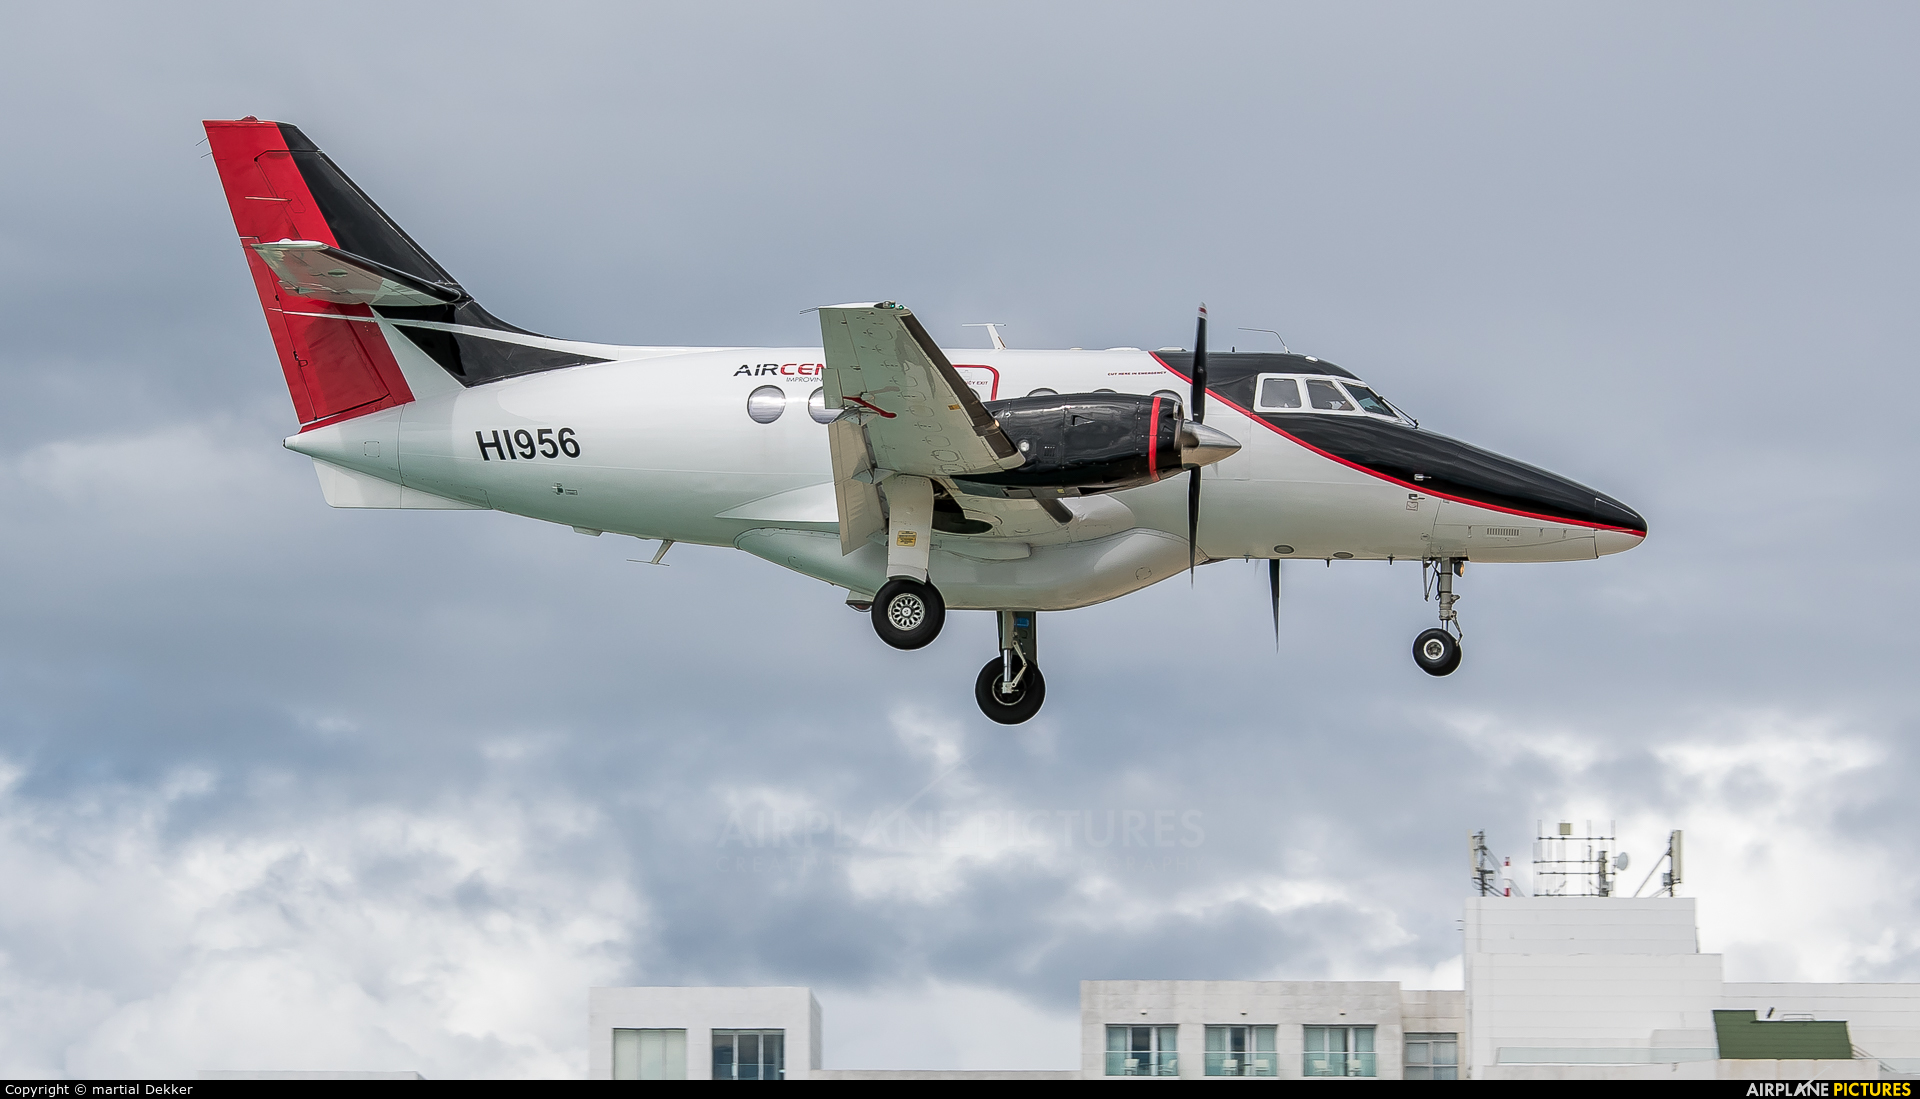 Air Century HI956 aircraft at Sint Maarten - Princess Juliana Intl